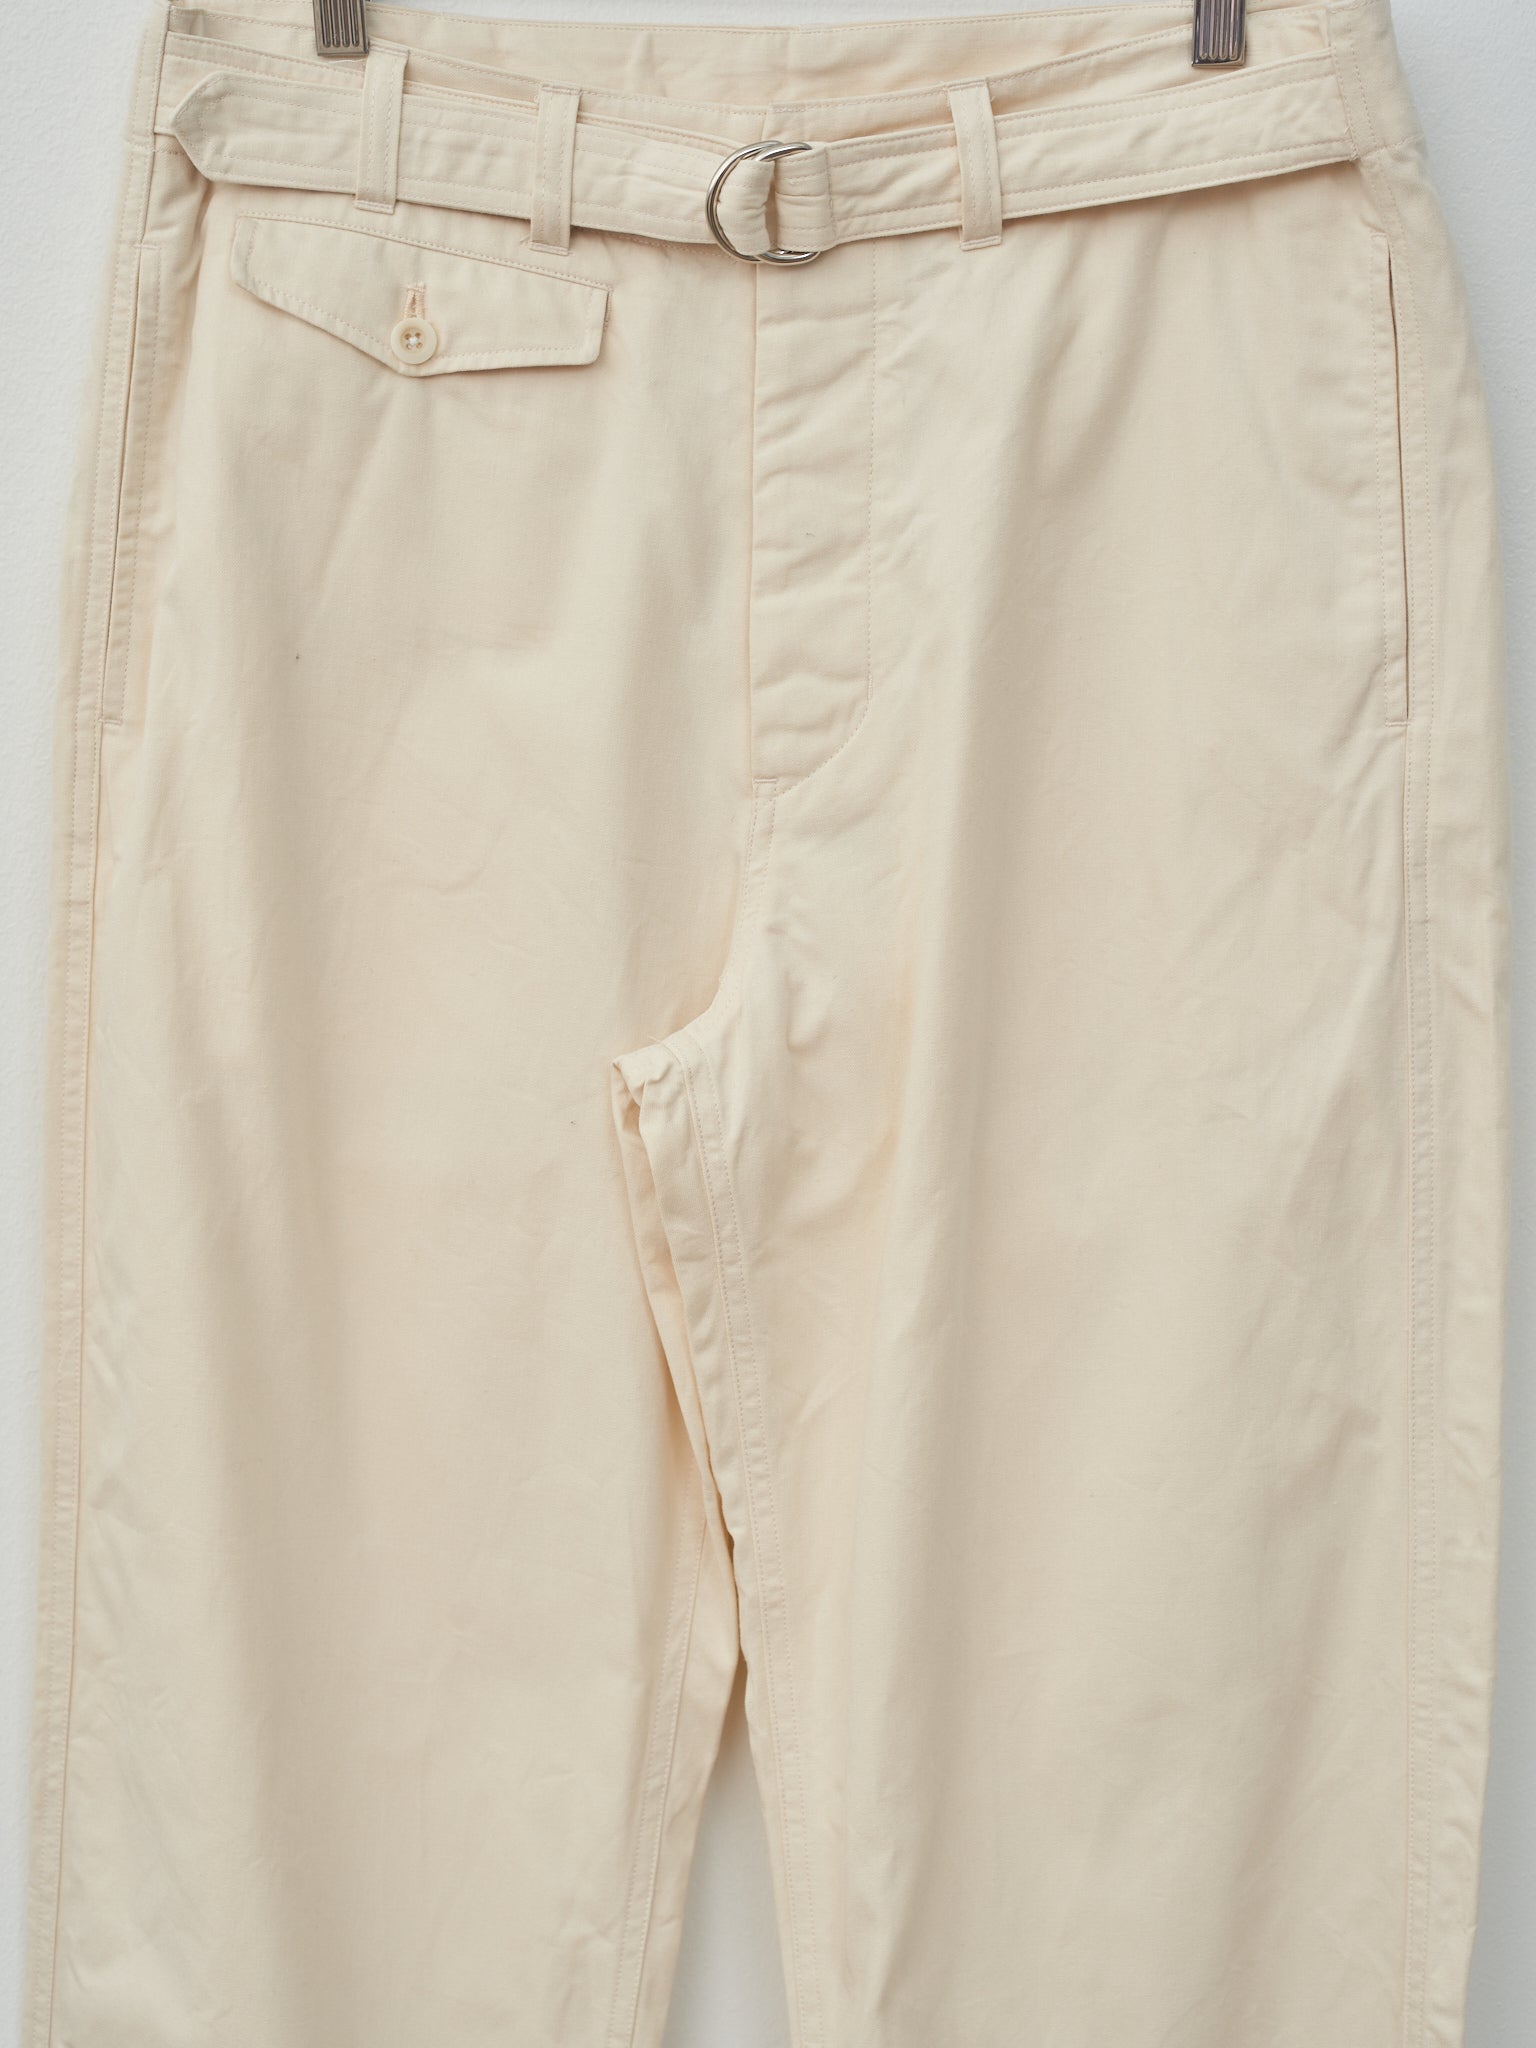 Namu Shop - ts(s) Cotton Slub D-Ring Belted Pants - Natural